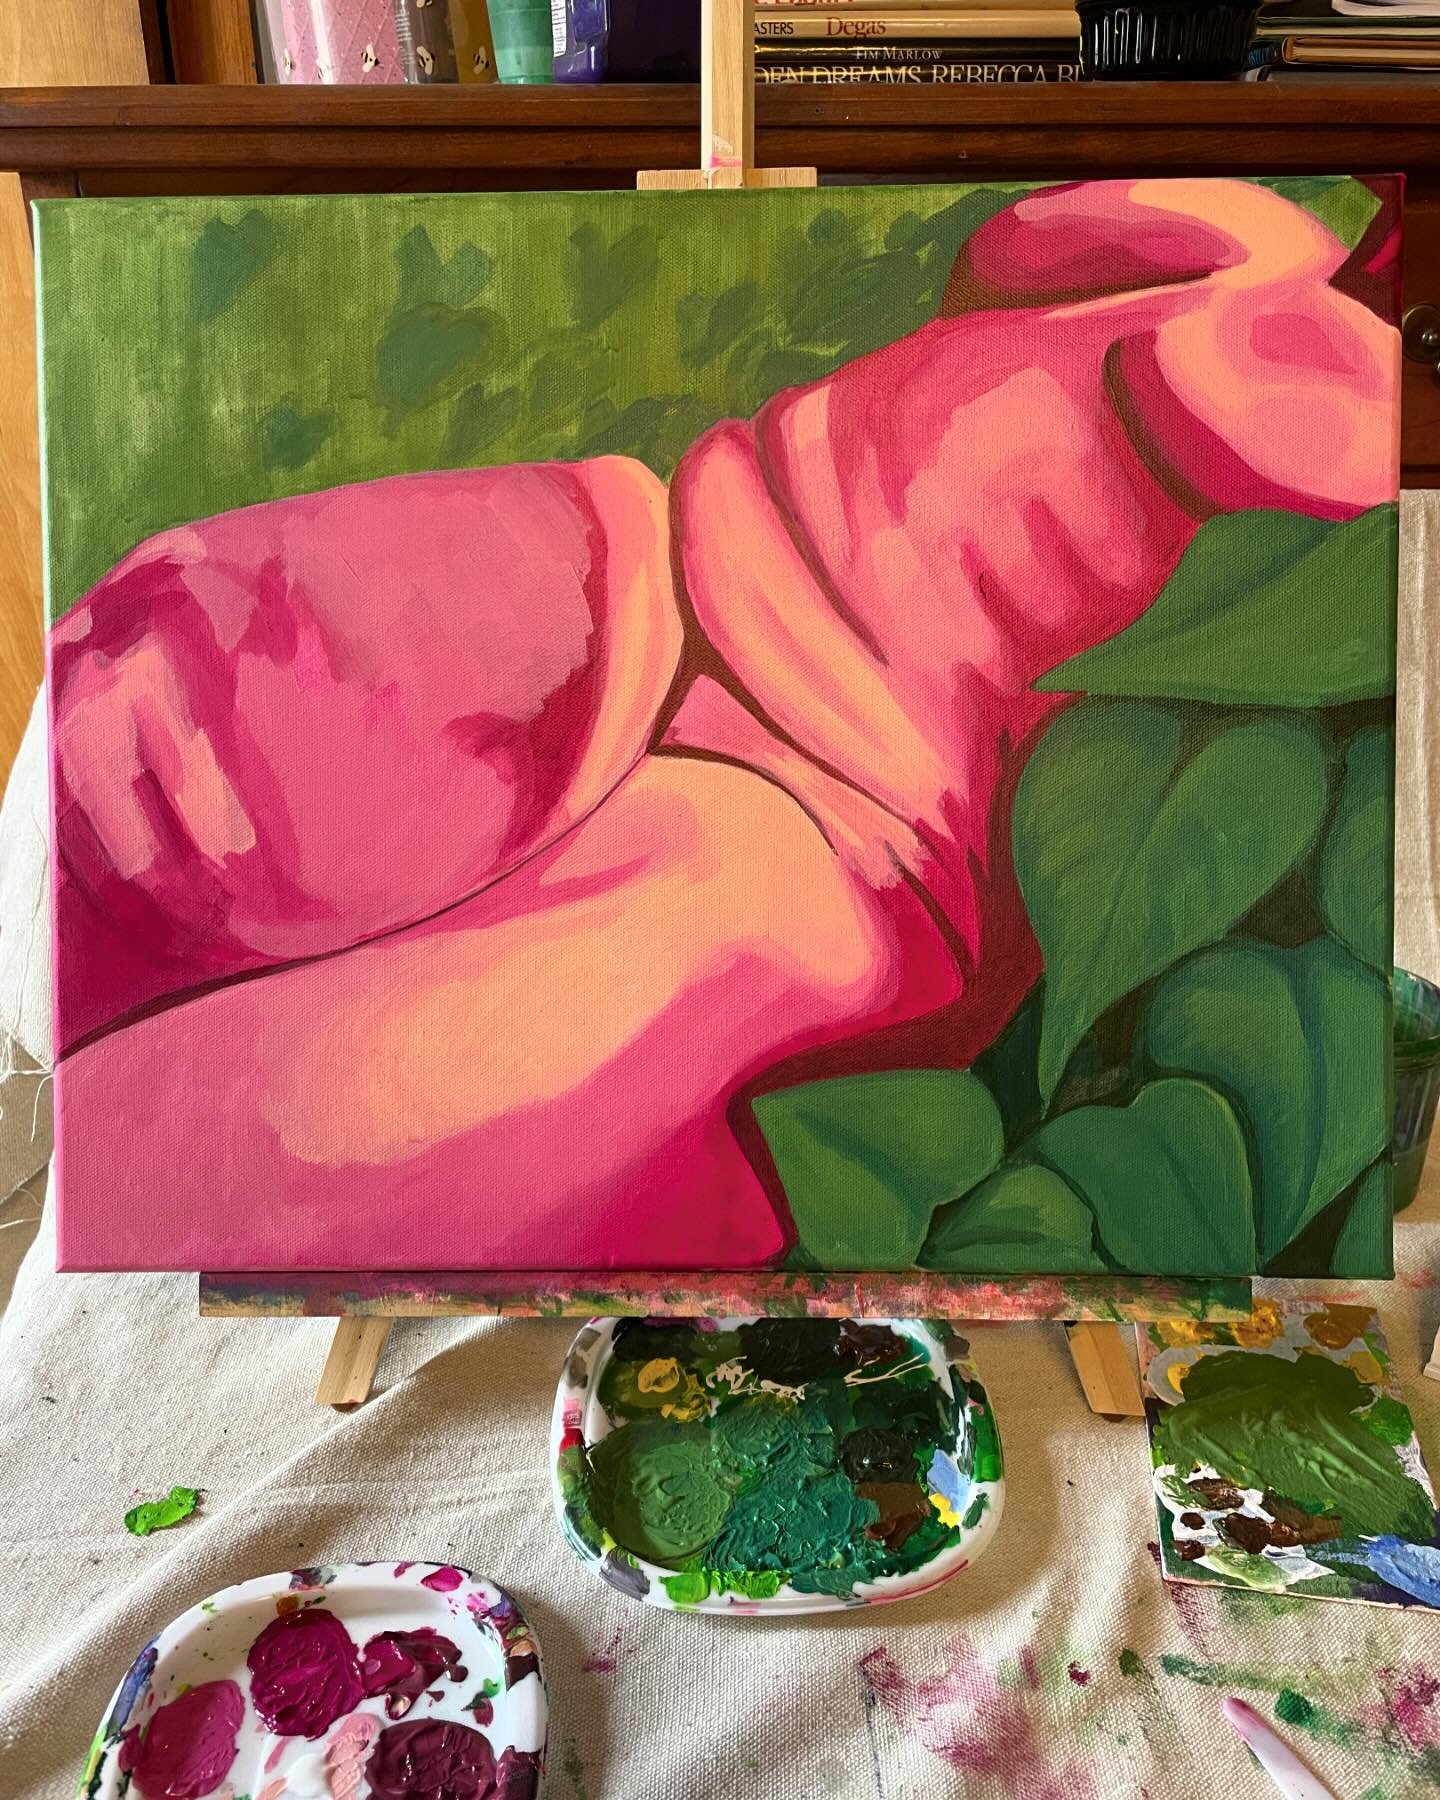 Progress shot from some work done over the weekend on this artwork in progress.

#haleynevilleart #newenglandartist #figurativeartwork #figureandfoliage #botanicalpaintings #womenpaintingwomen